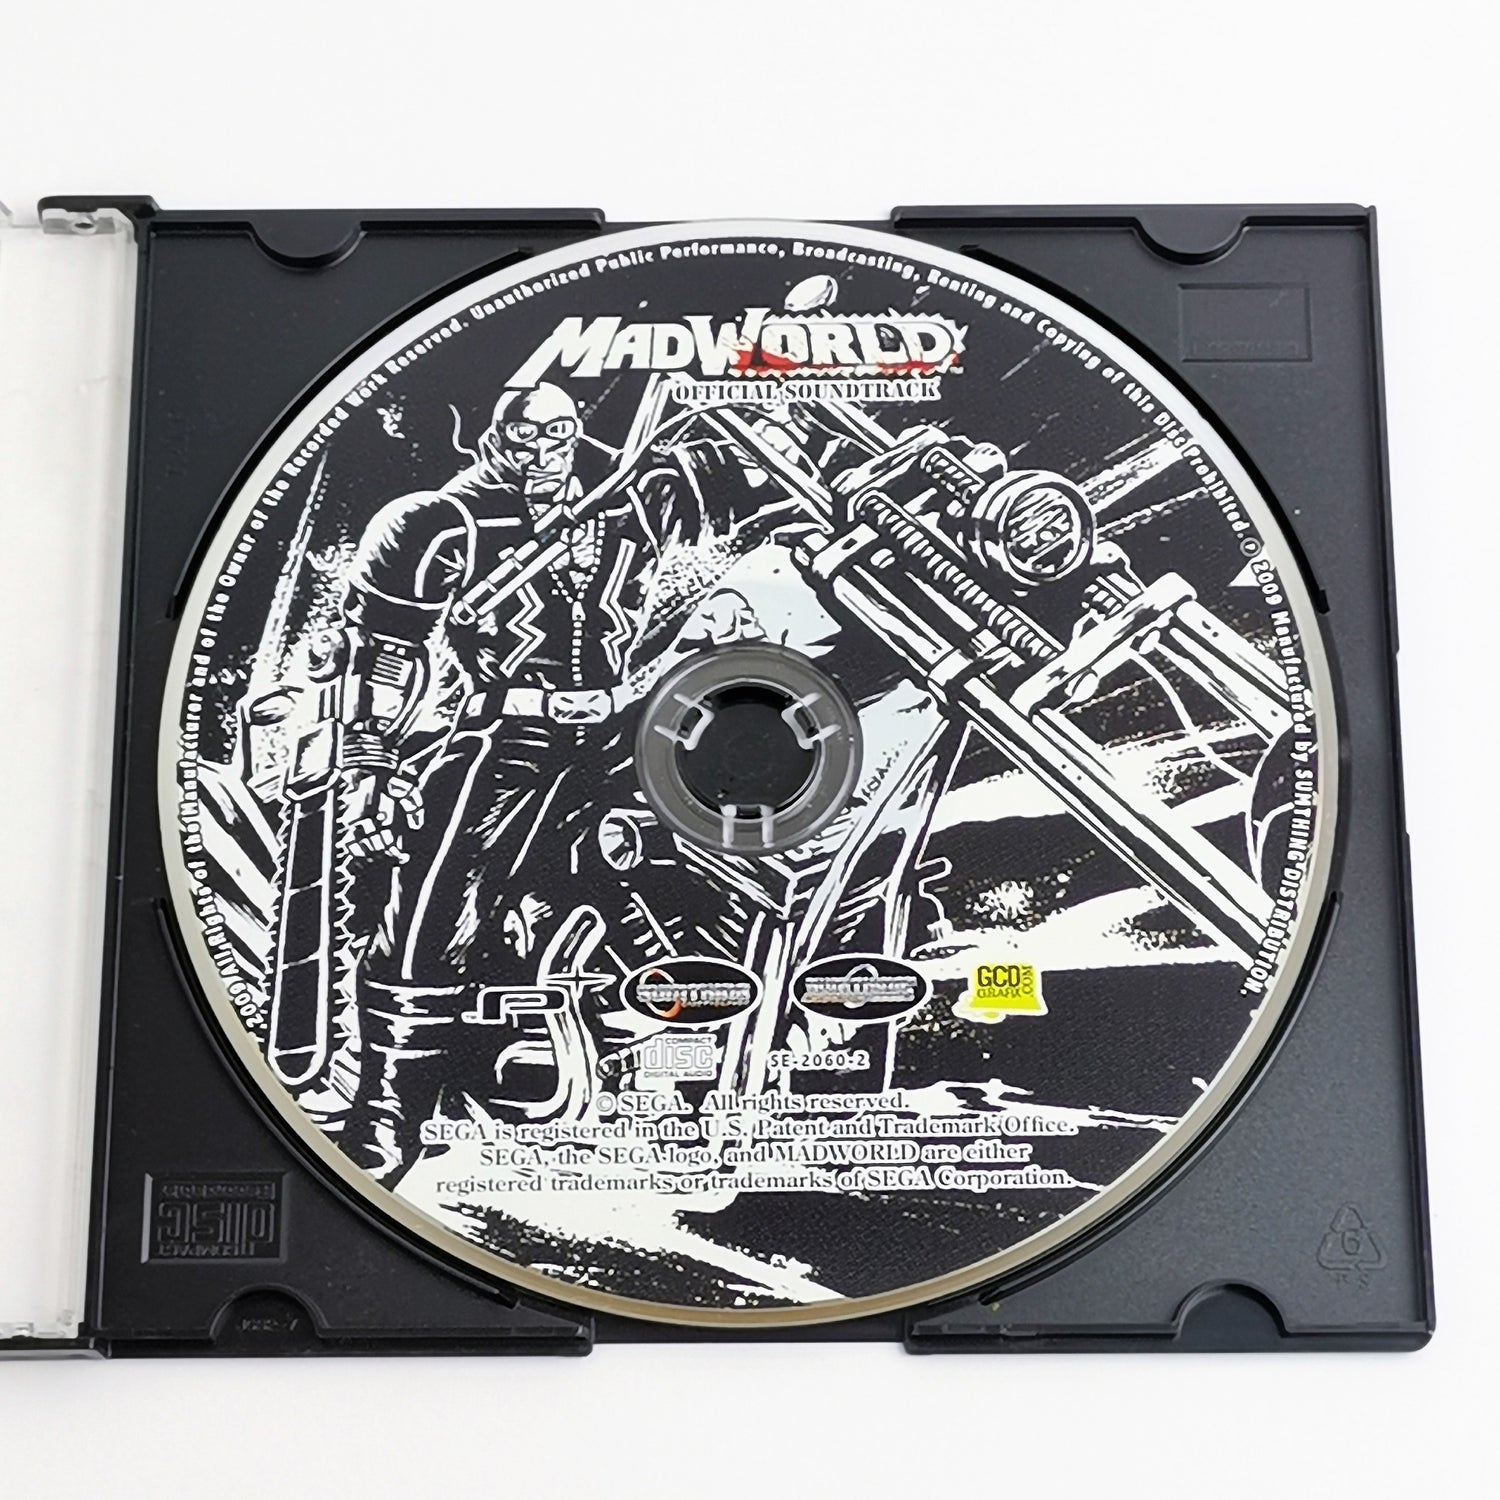 Audio Soundtrack CD zu dem Spiel : Mad World